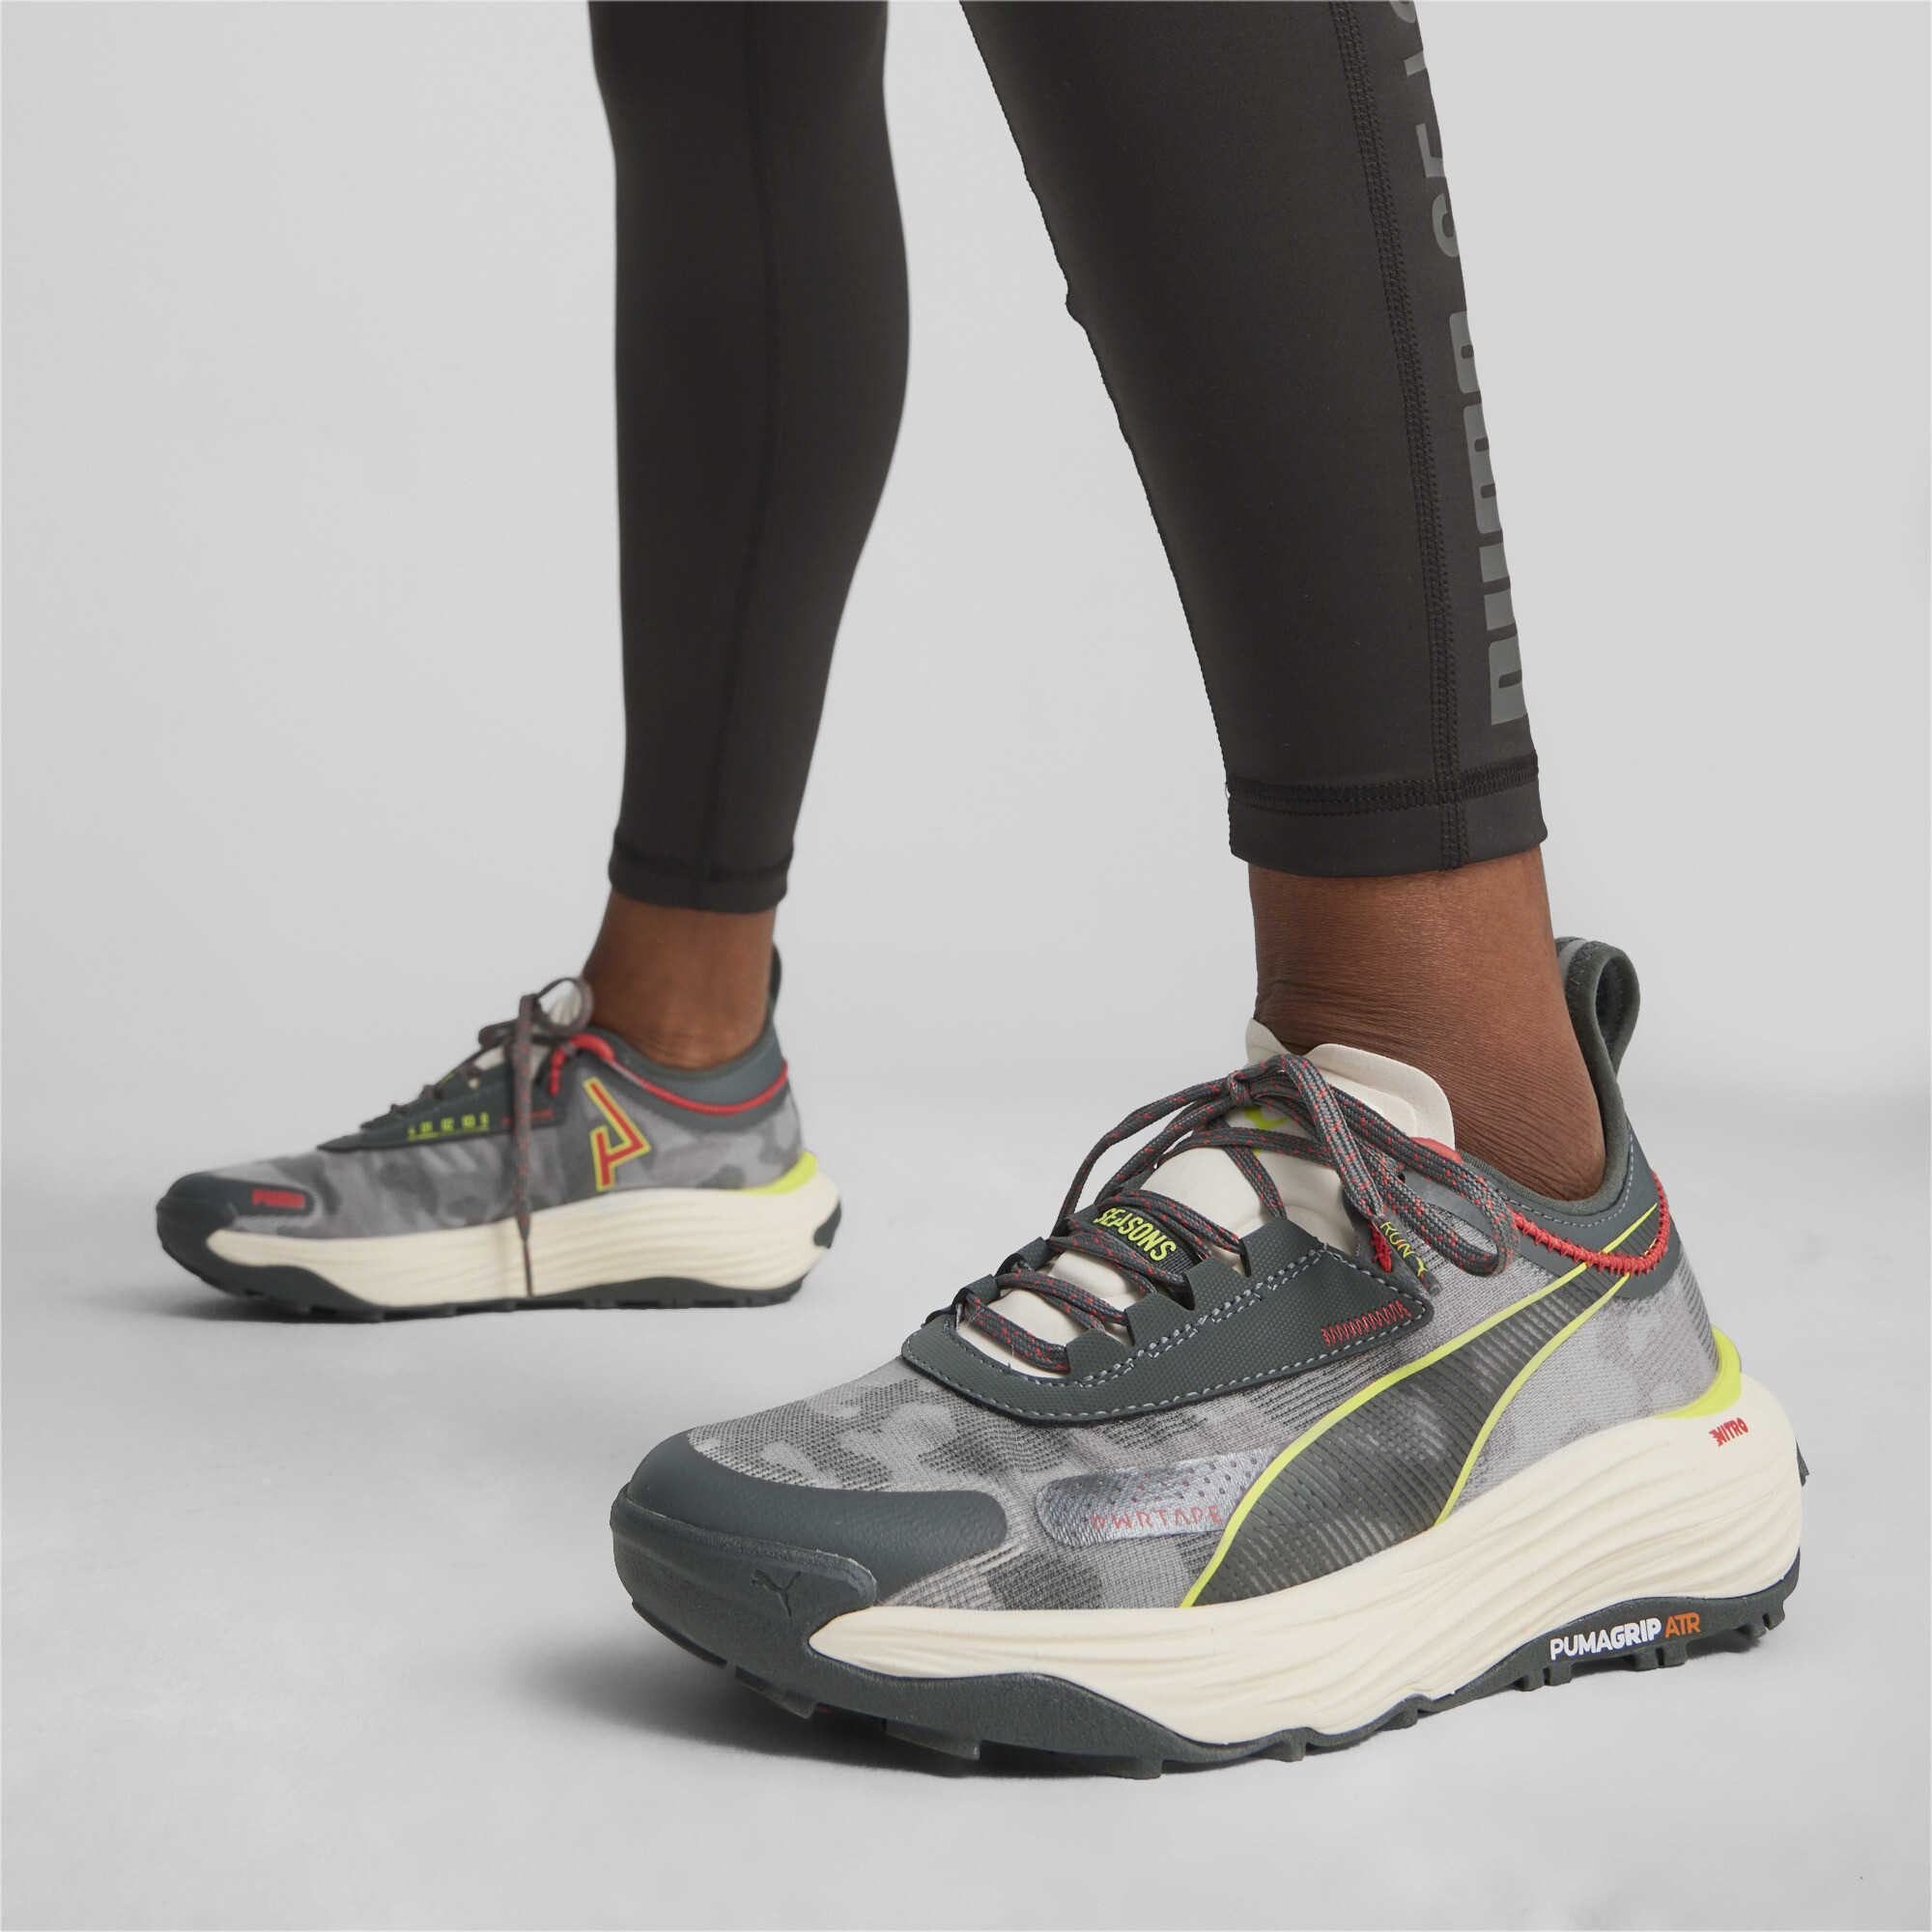 Women's PUMA Voyage NITROâ¢ 3 Trail Running Shoes In Gray, Size EU 39